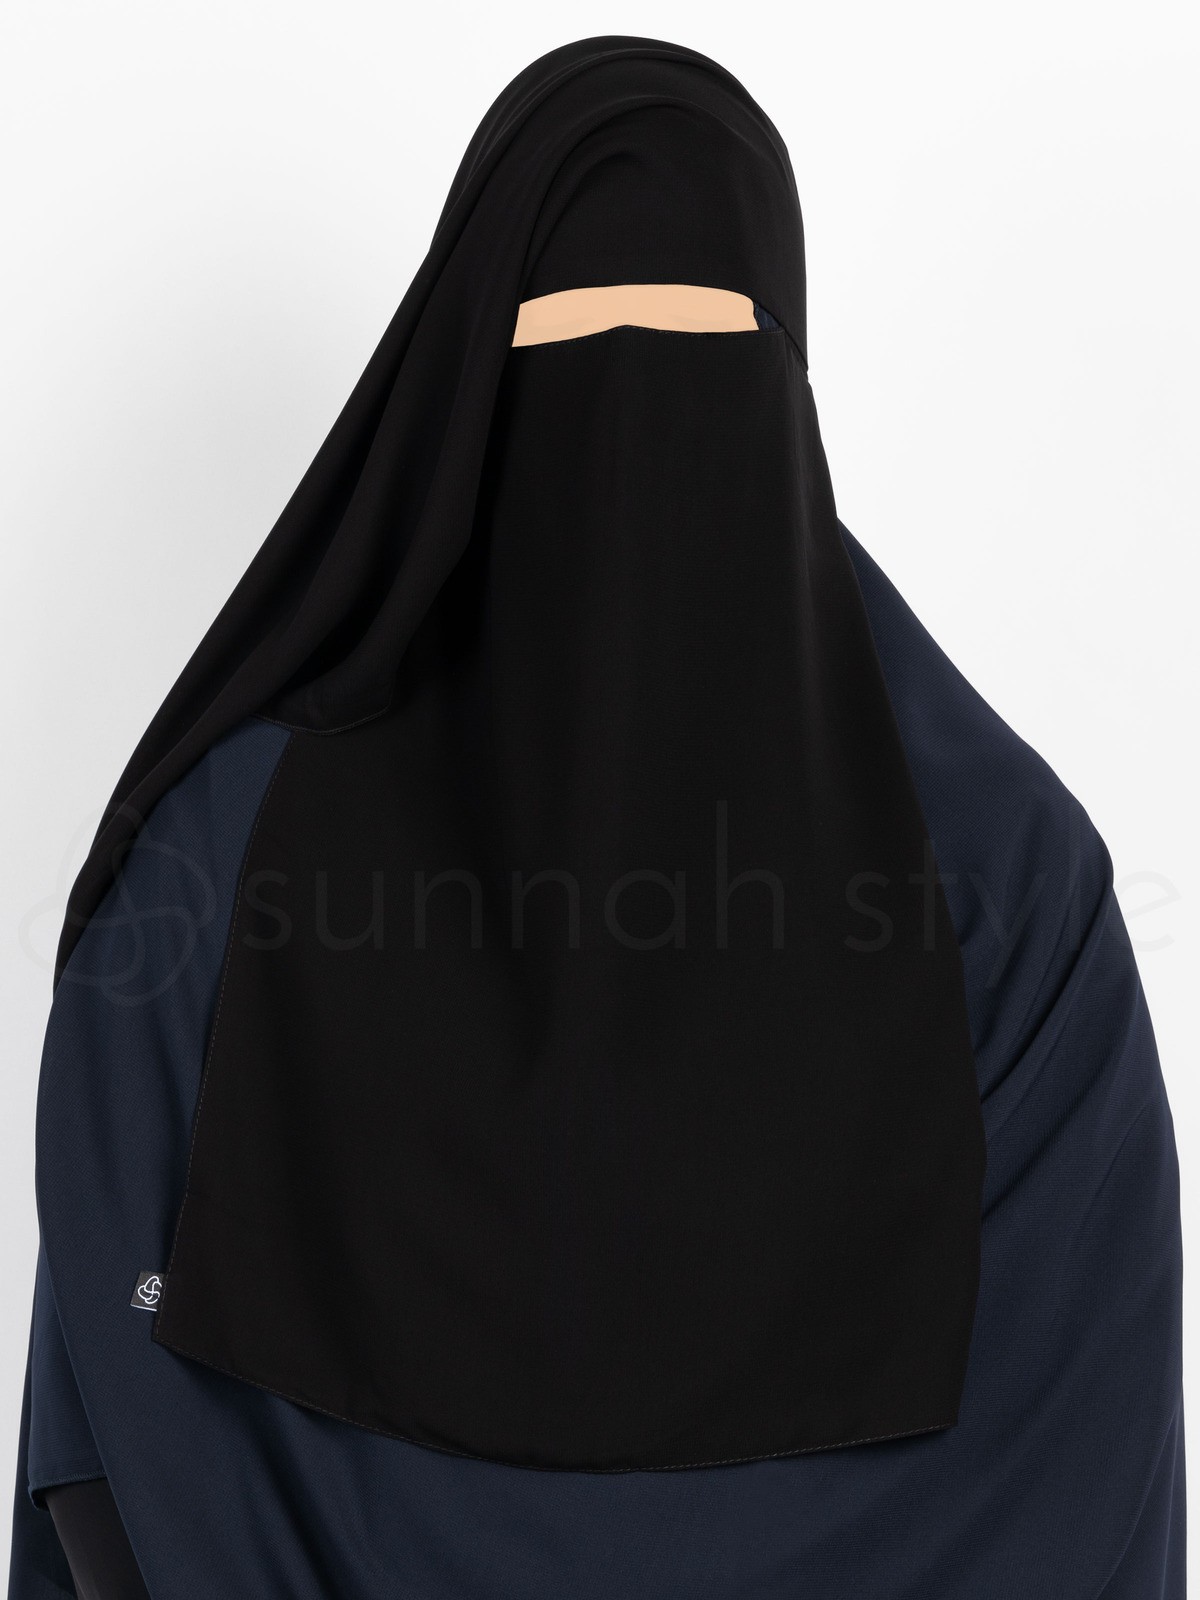 Sunnah Style - Three Layer Niqab (Black)